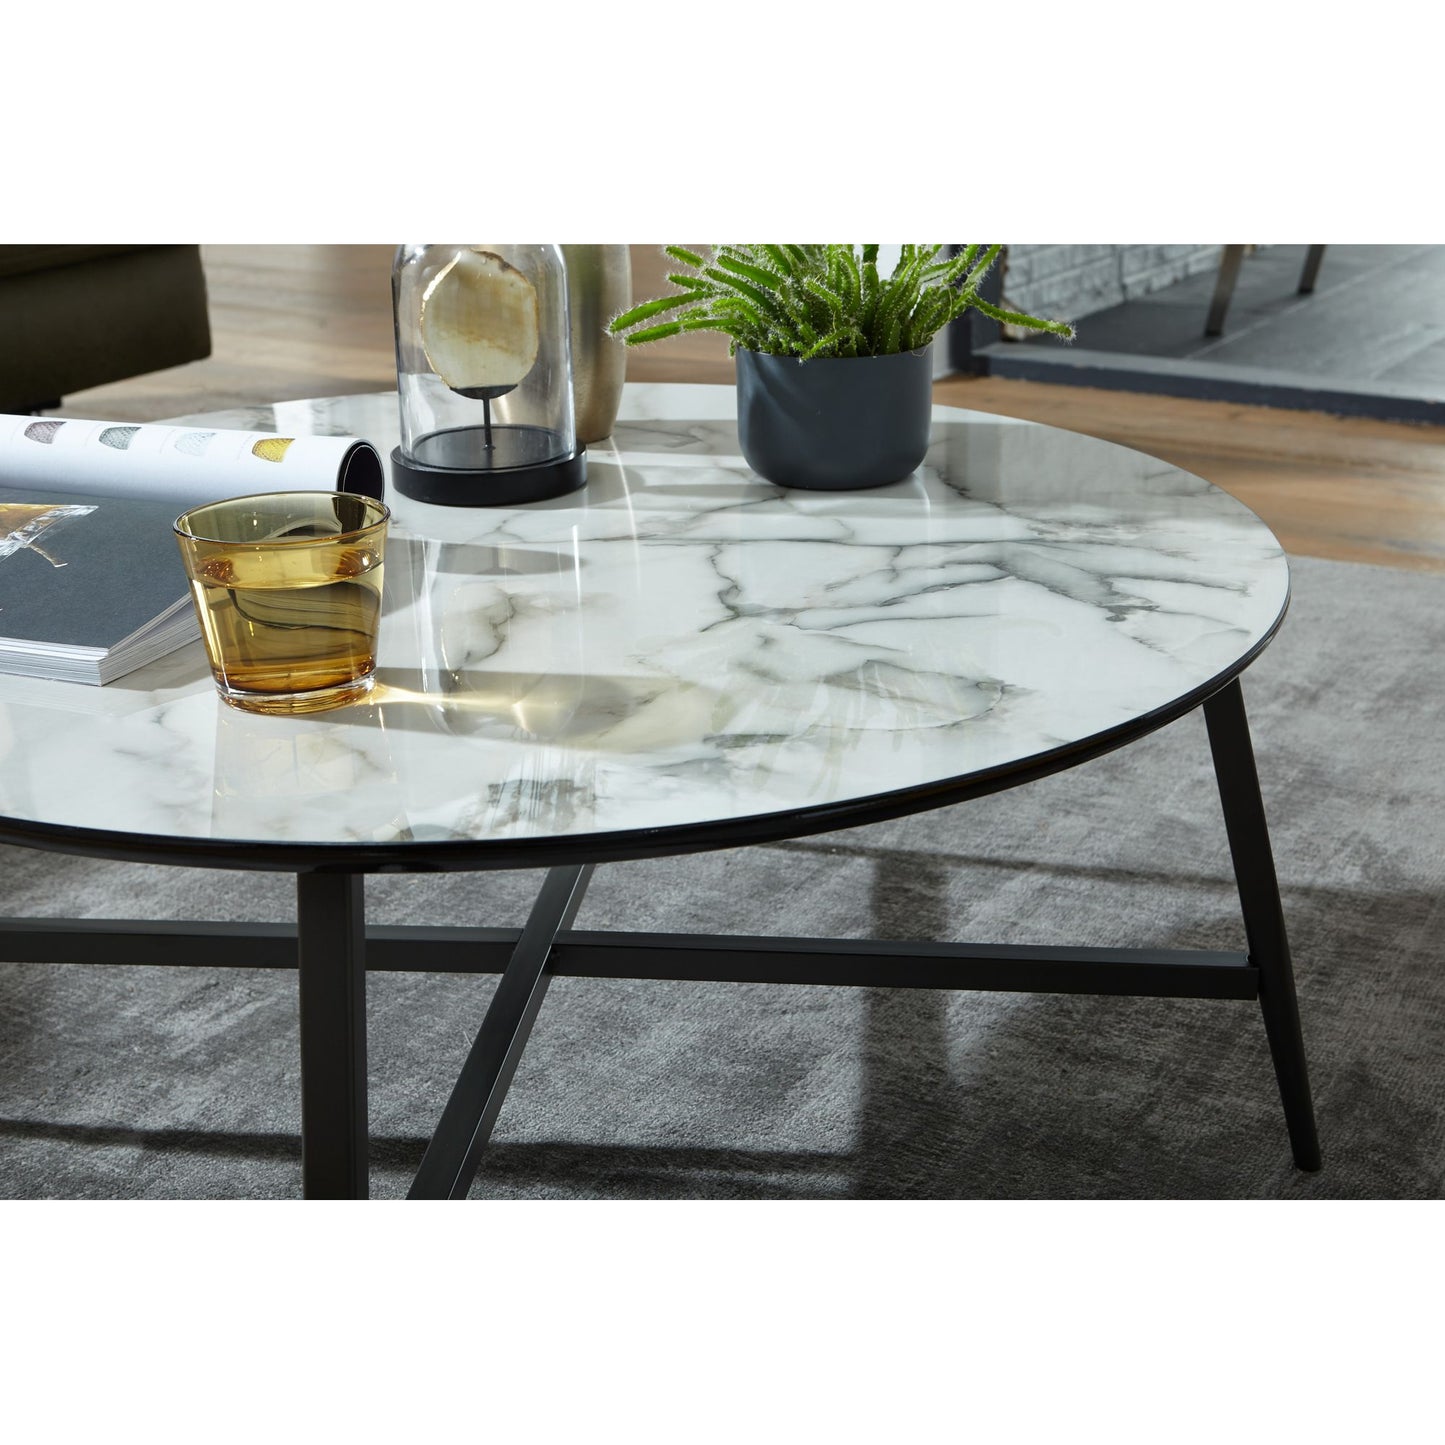 Nancy's Orem Coffee table - Coffee table - Coffee tables - Round Coffee table - Marble look - Black - 88x37x88cm